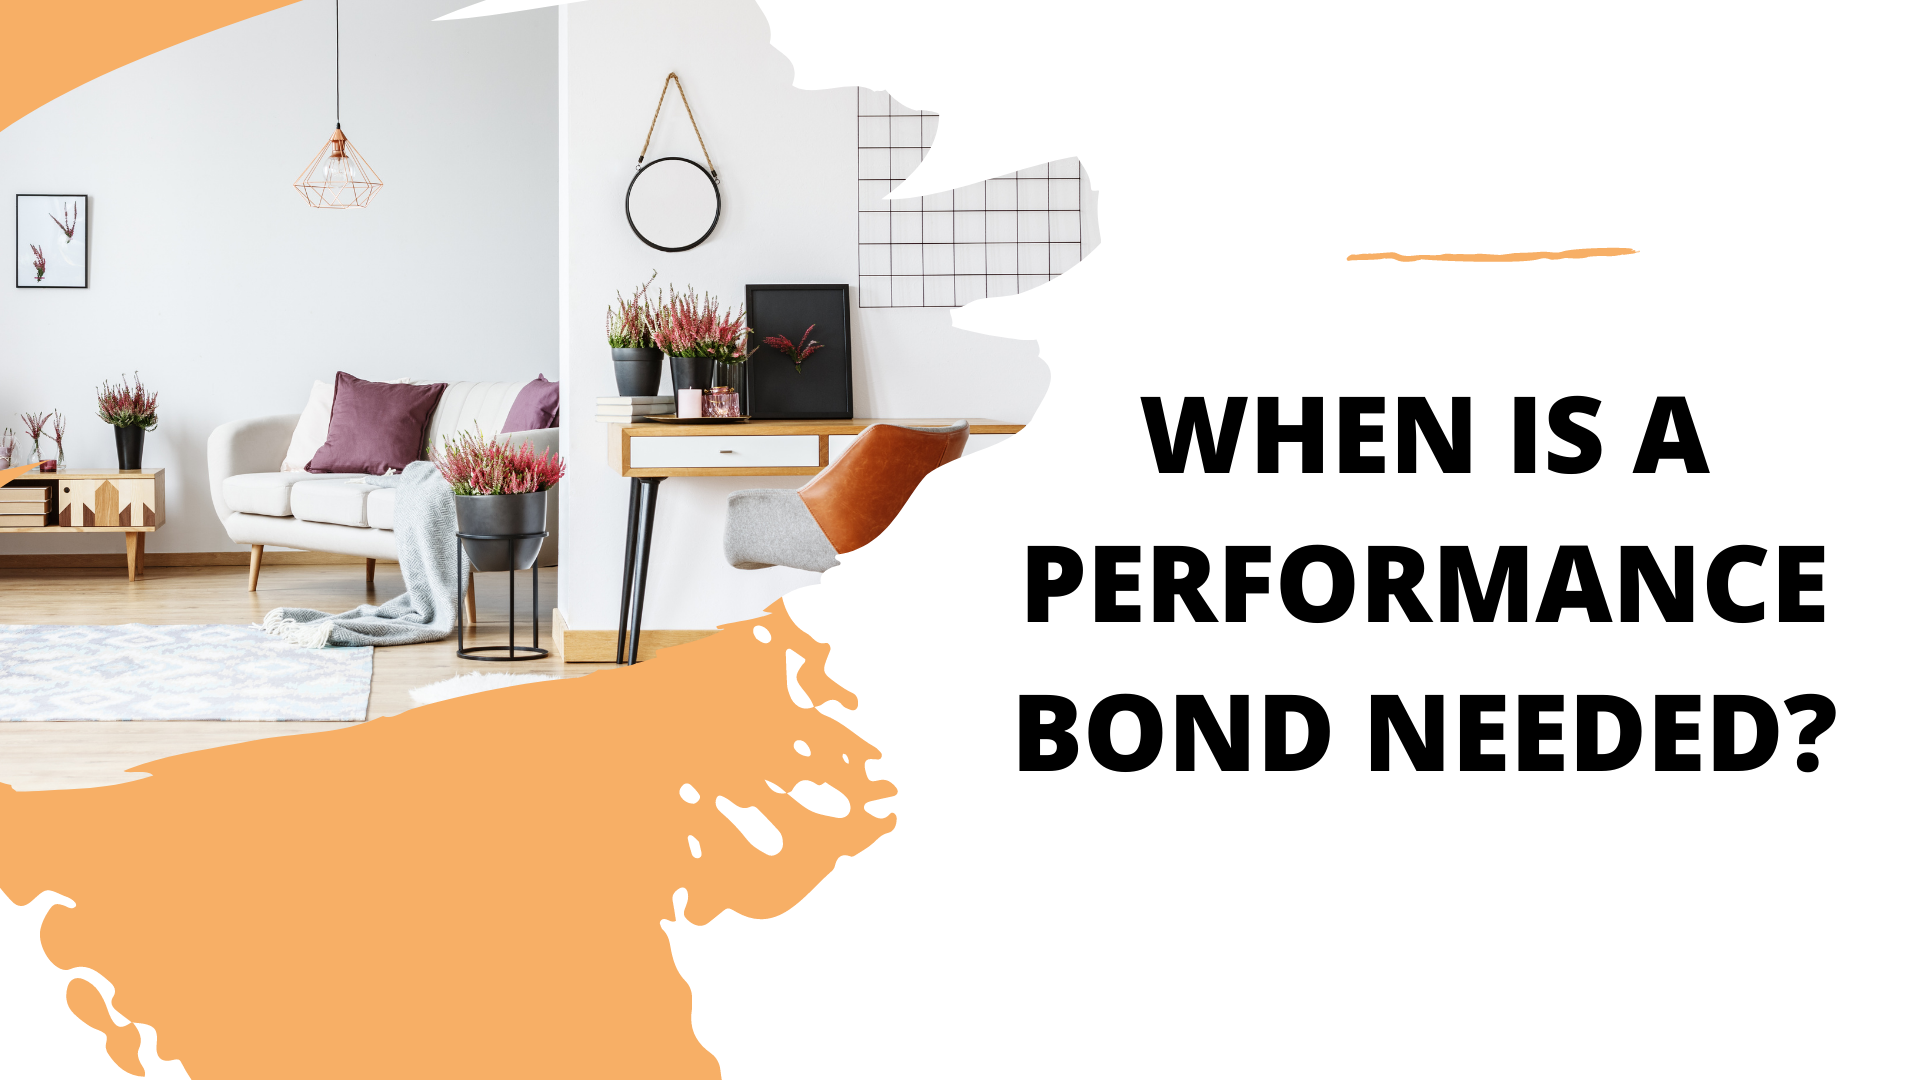 performance bond - When the performance bond is needed - work setup